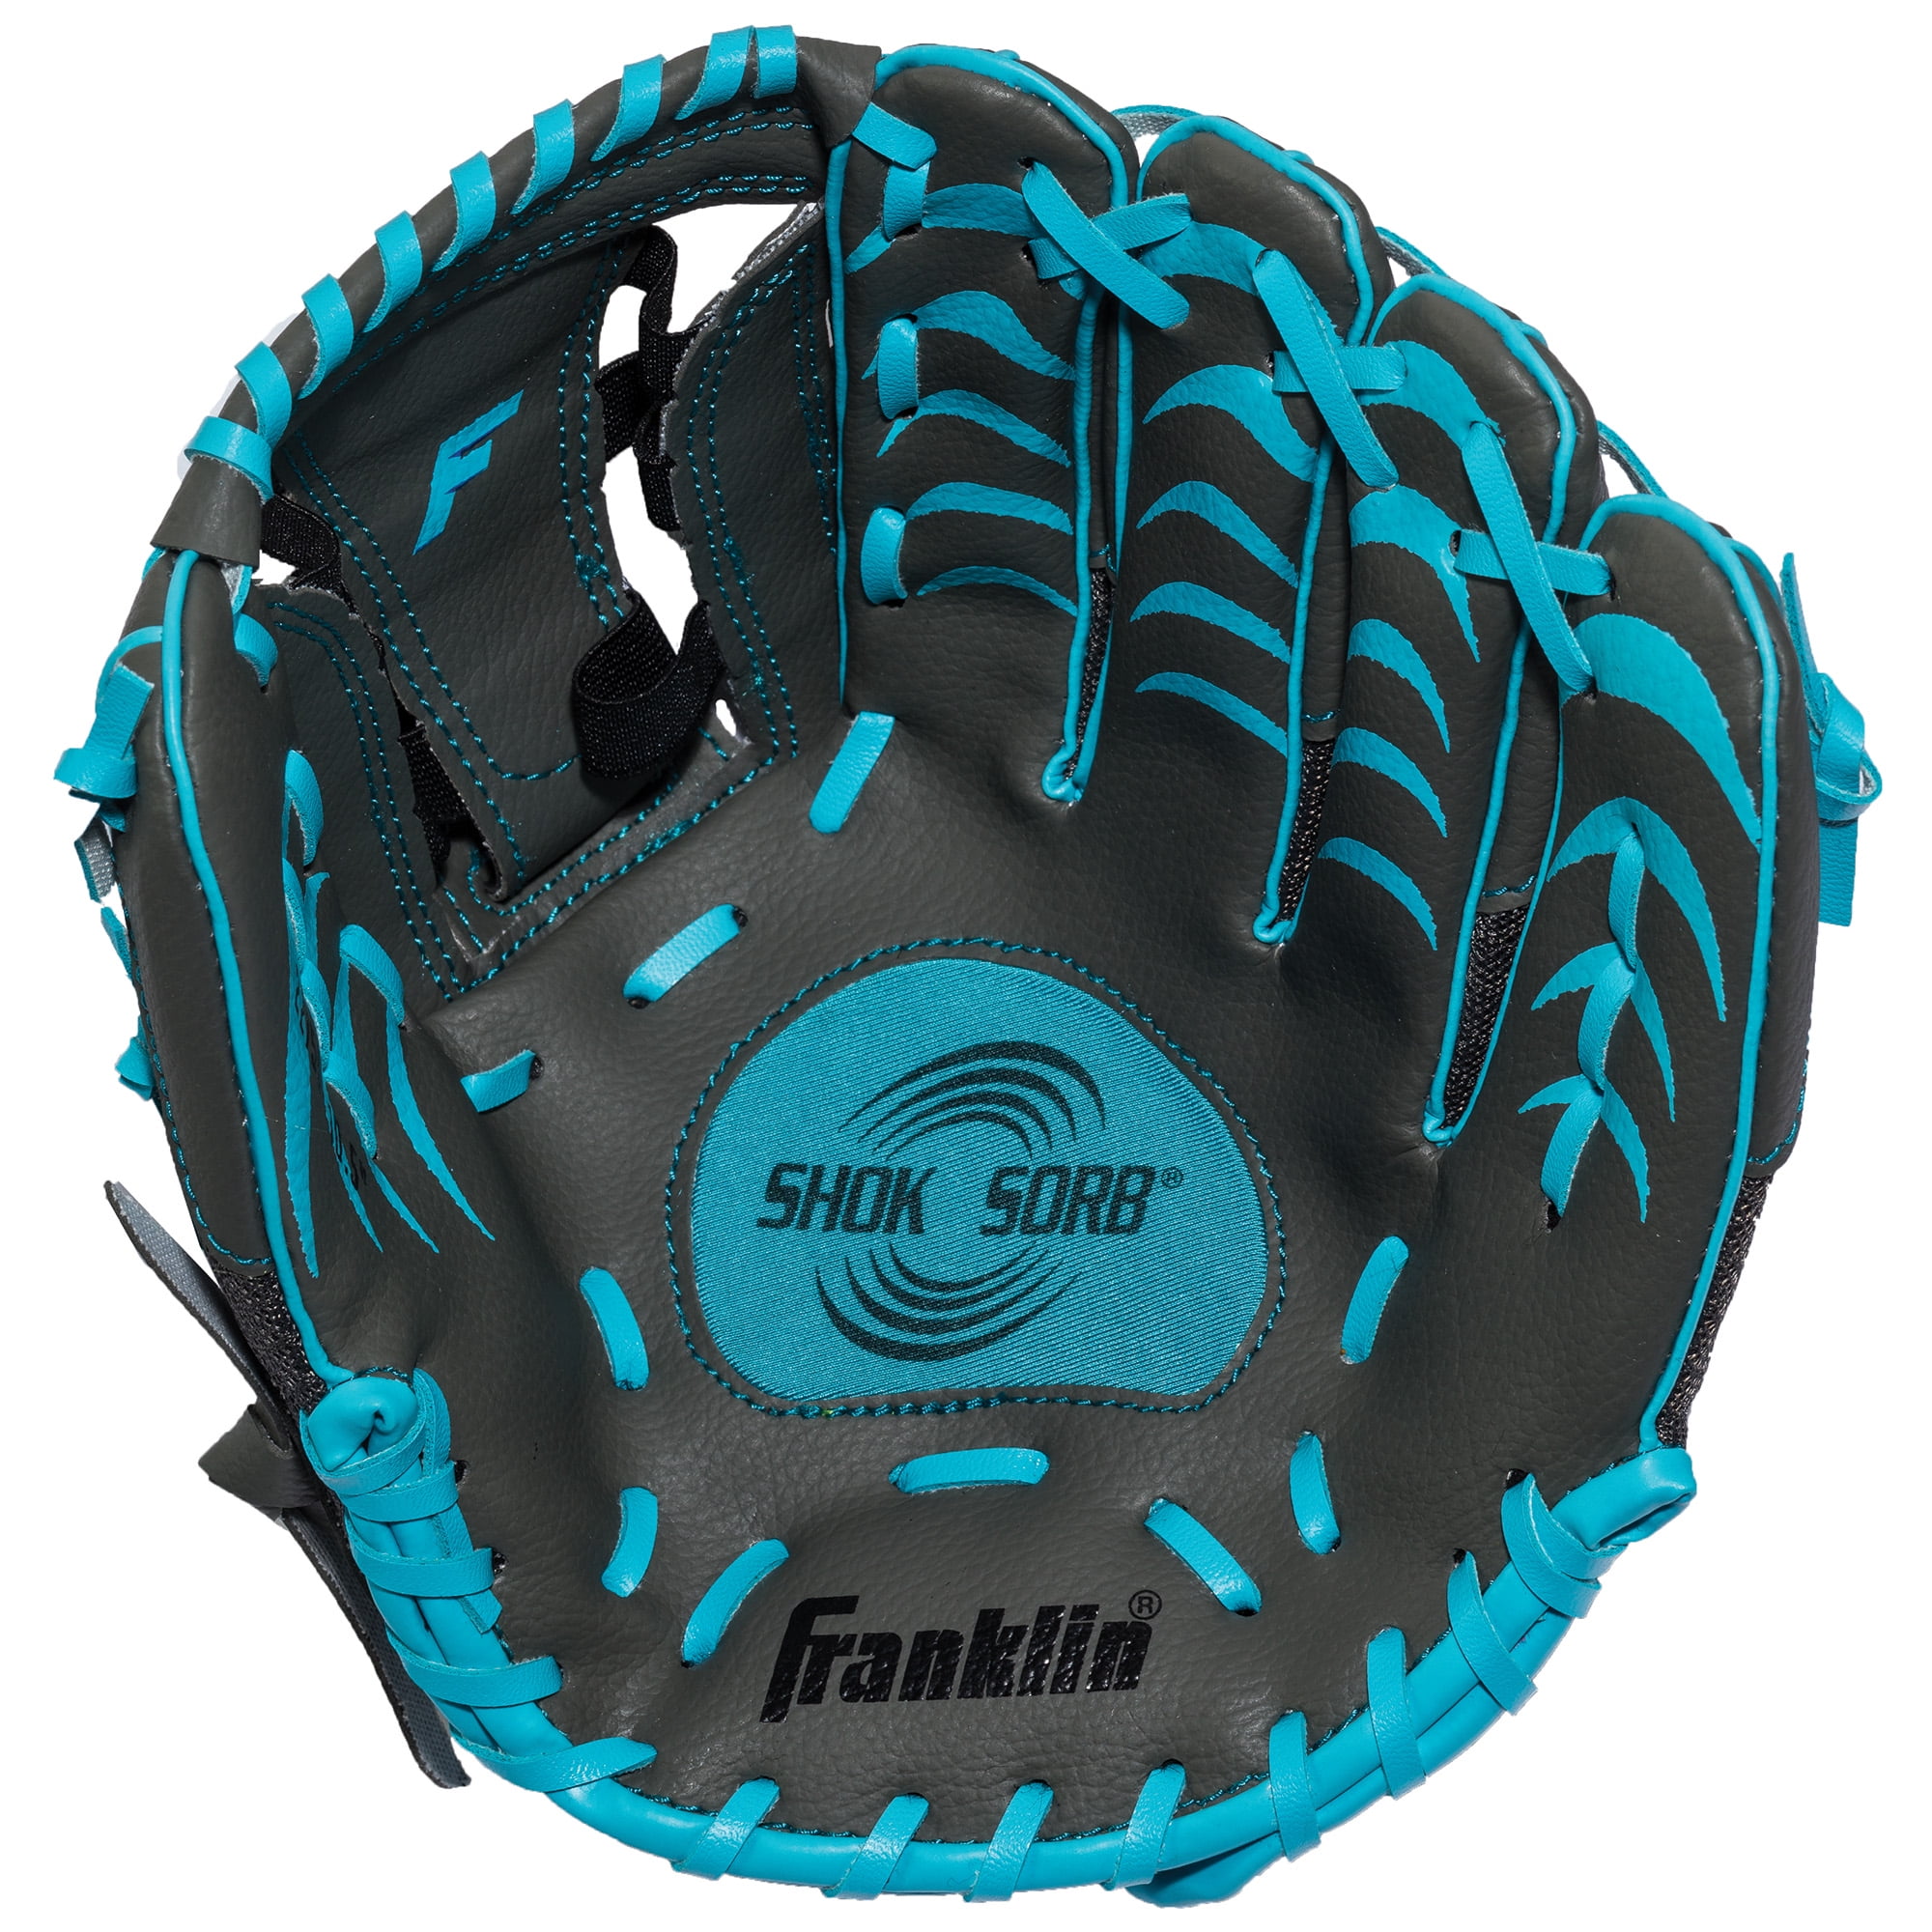 environ 26.67 cm Infinite Web SHOK Sorb Series Gant de base-ball NEUF FRANKLIN Sports 10.5 in 